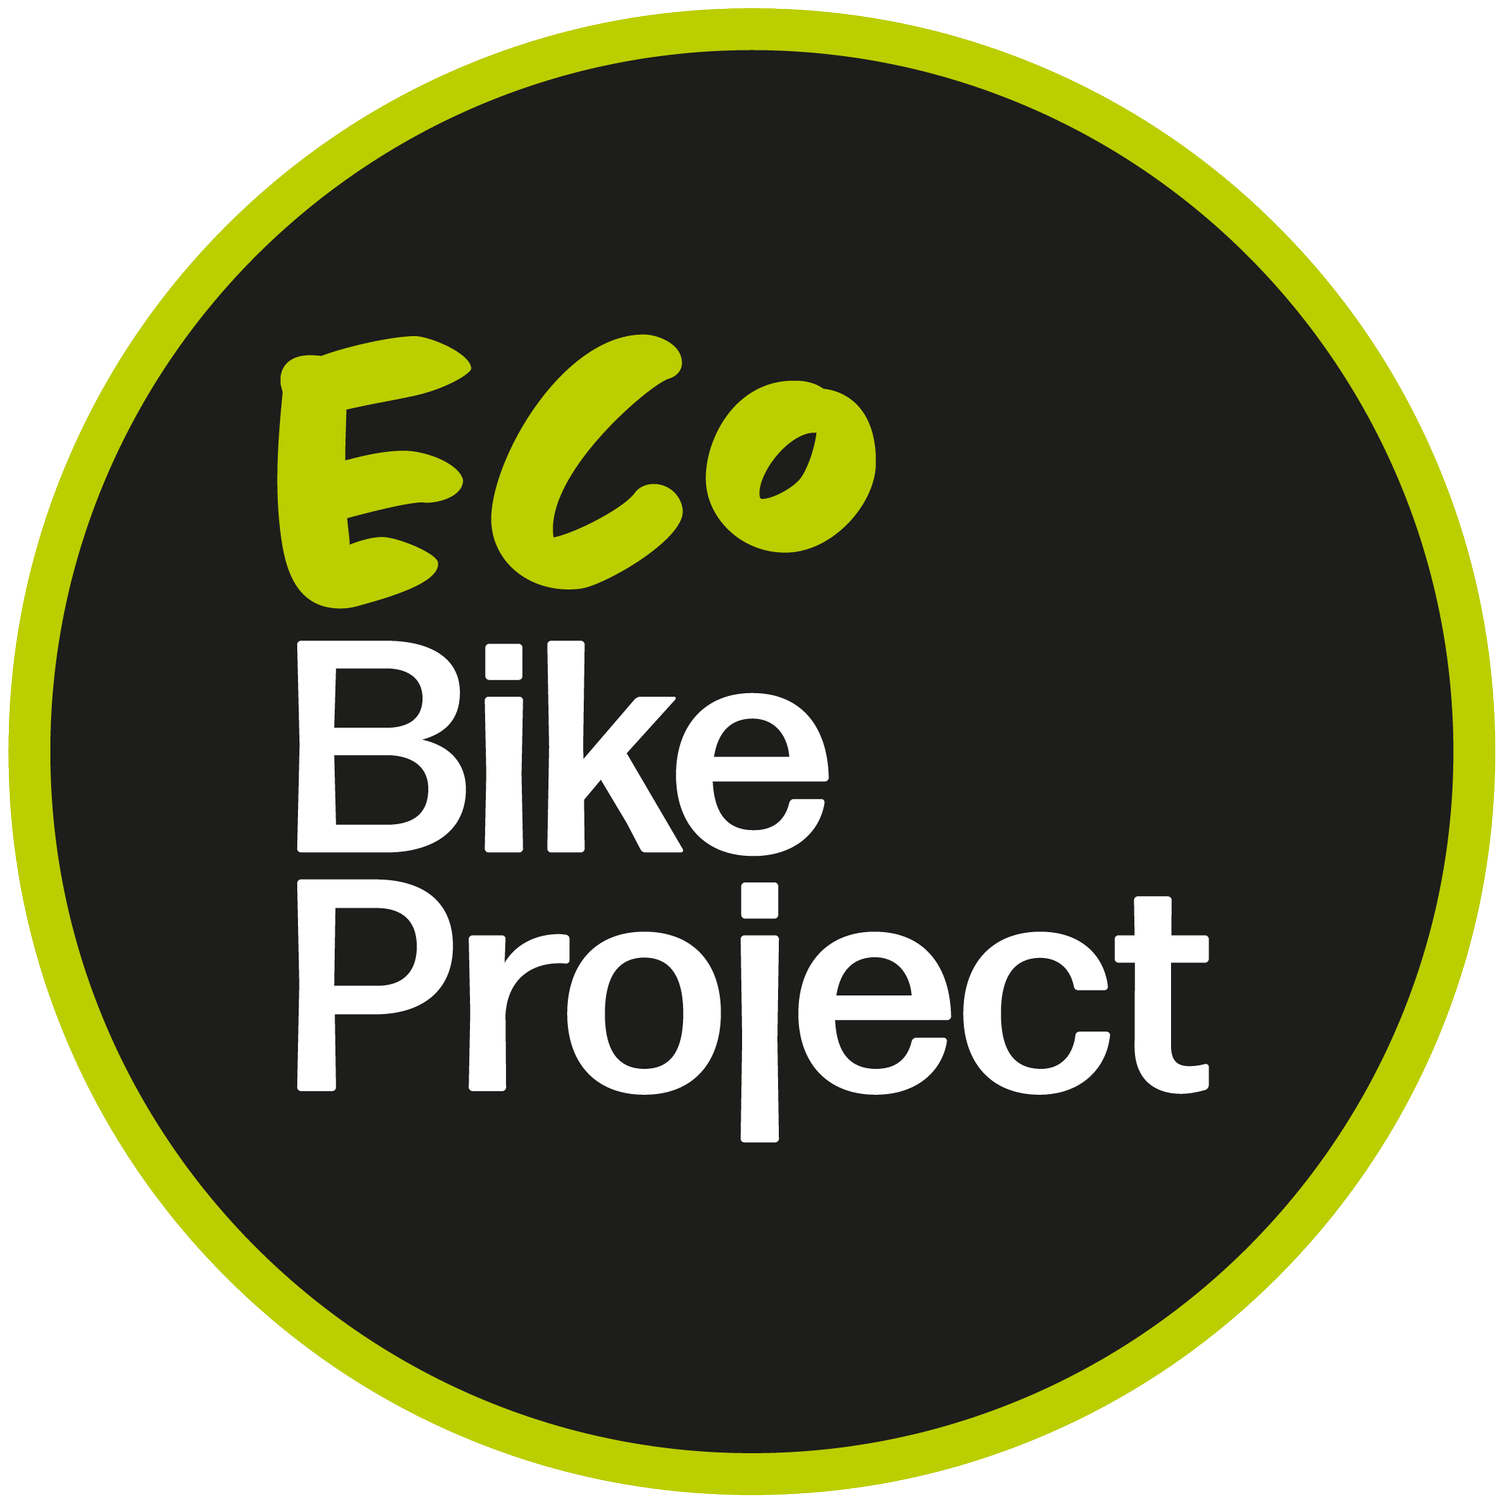 Eco bike project